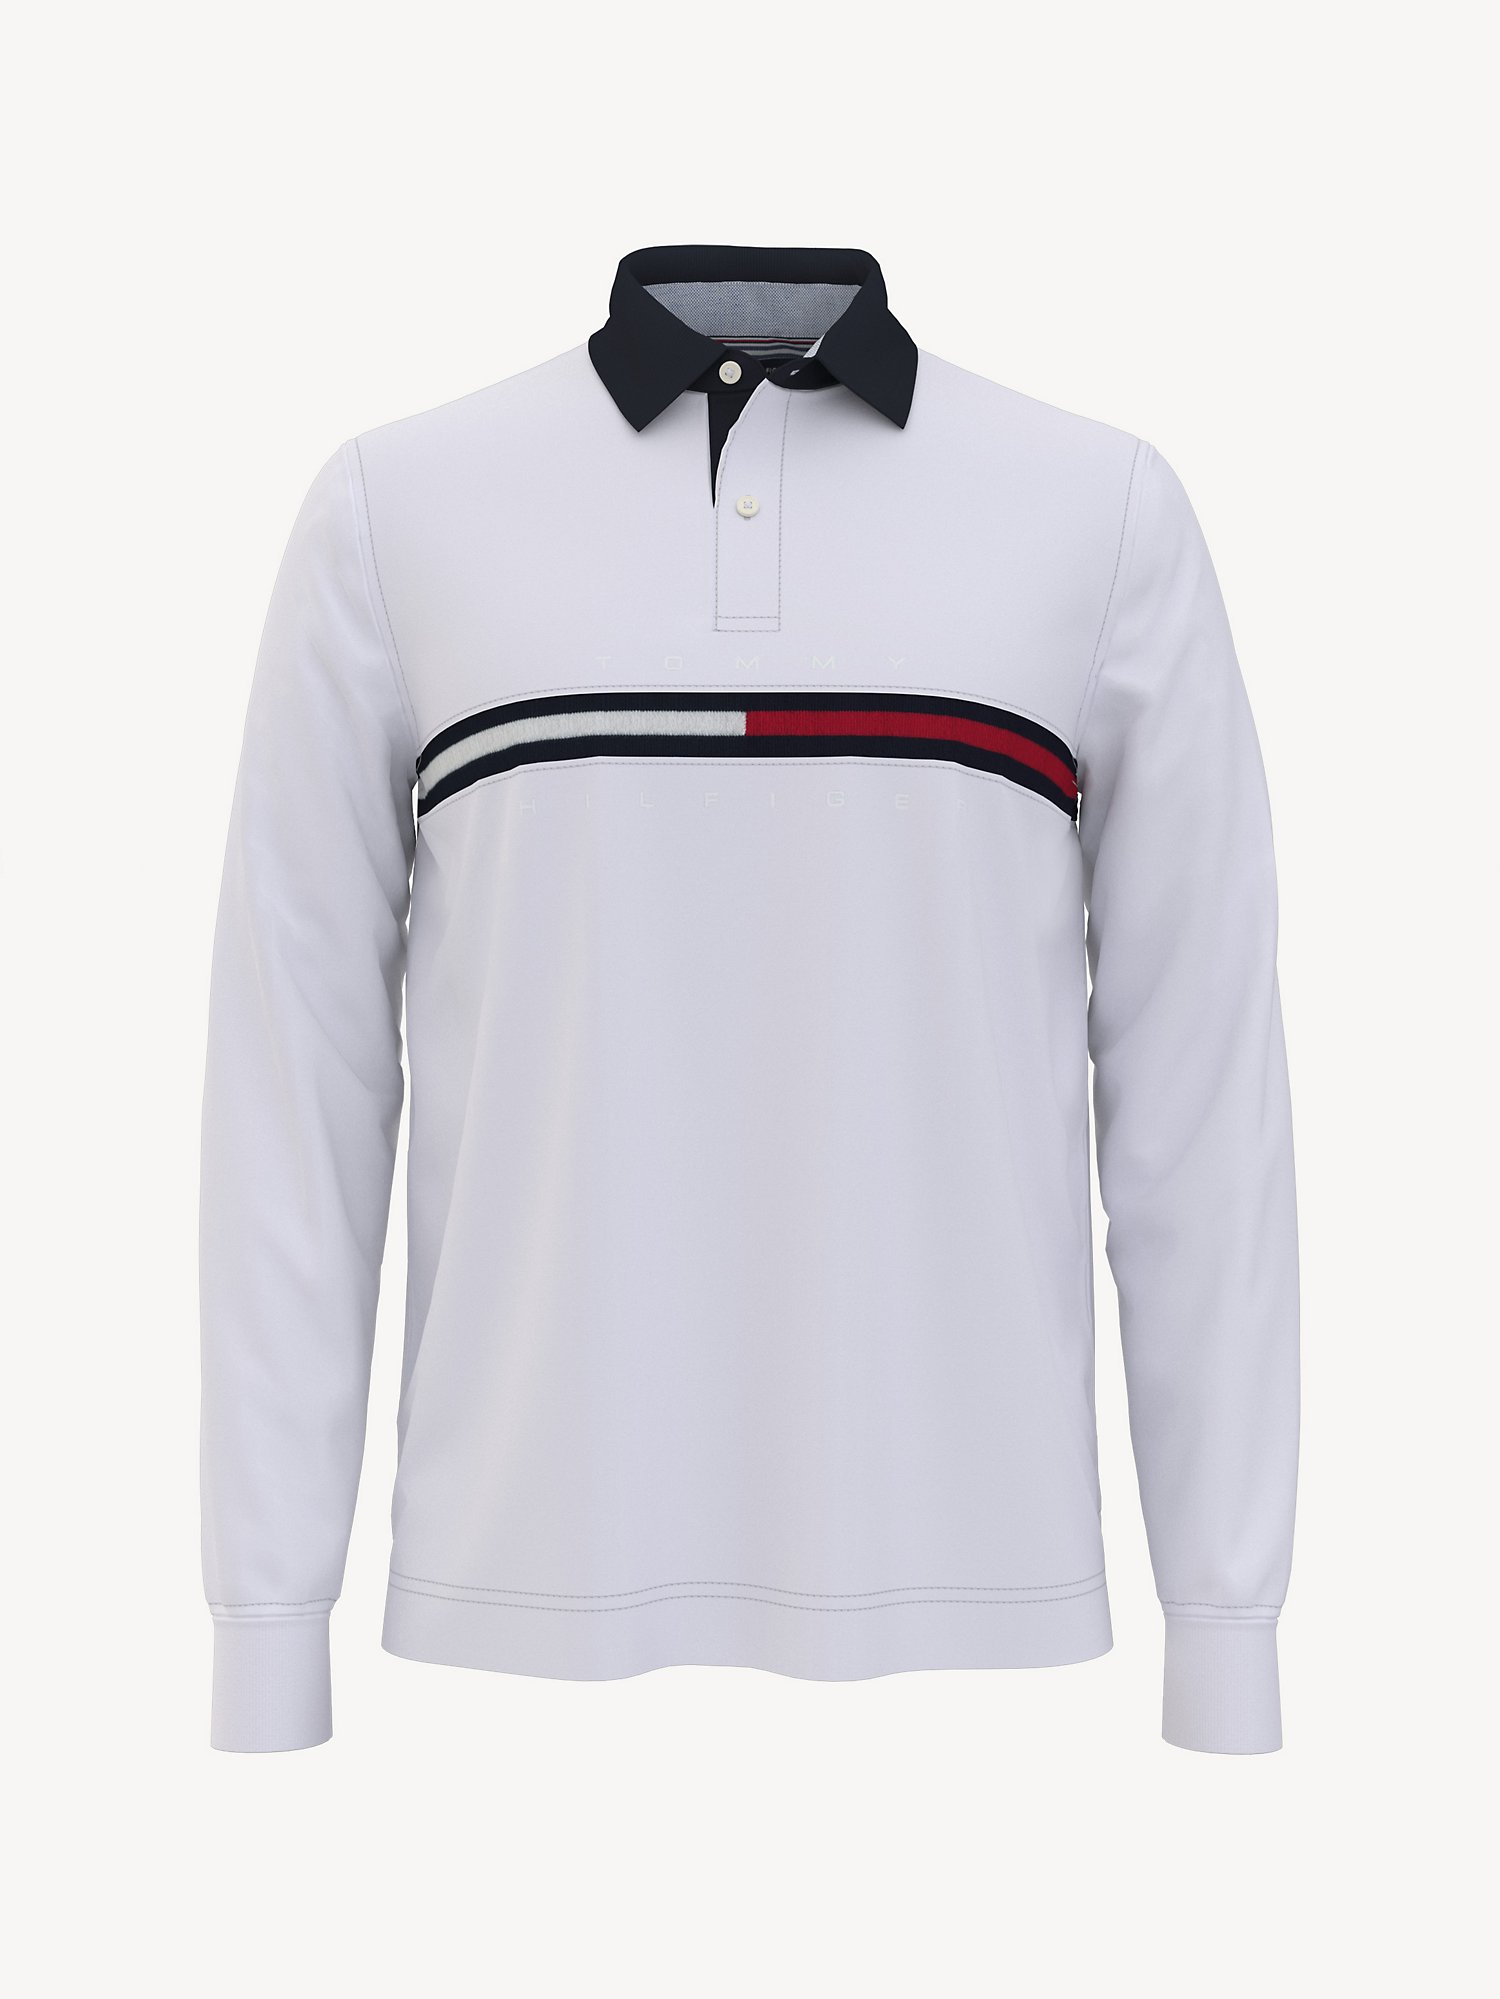 kold sortie Spis aftensmad Regular Fit Long-Sleeve Logo Polo | Tommy Hilfiger USA